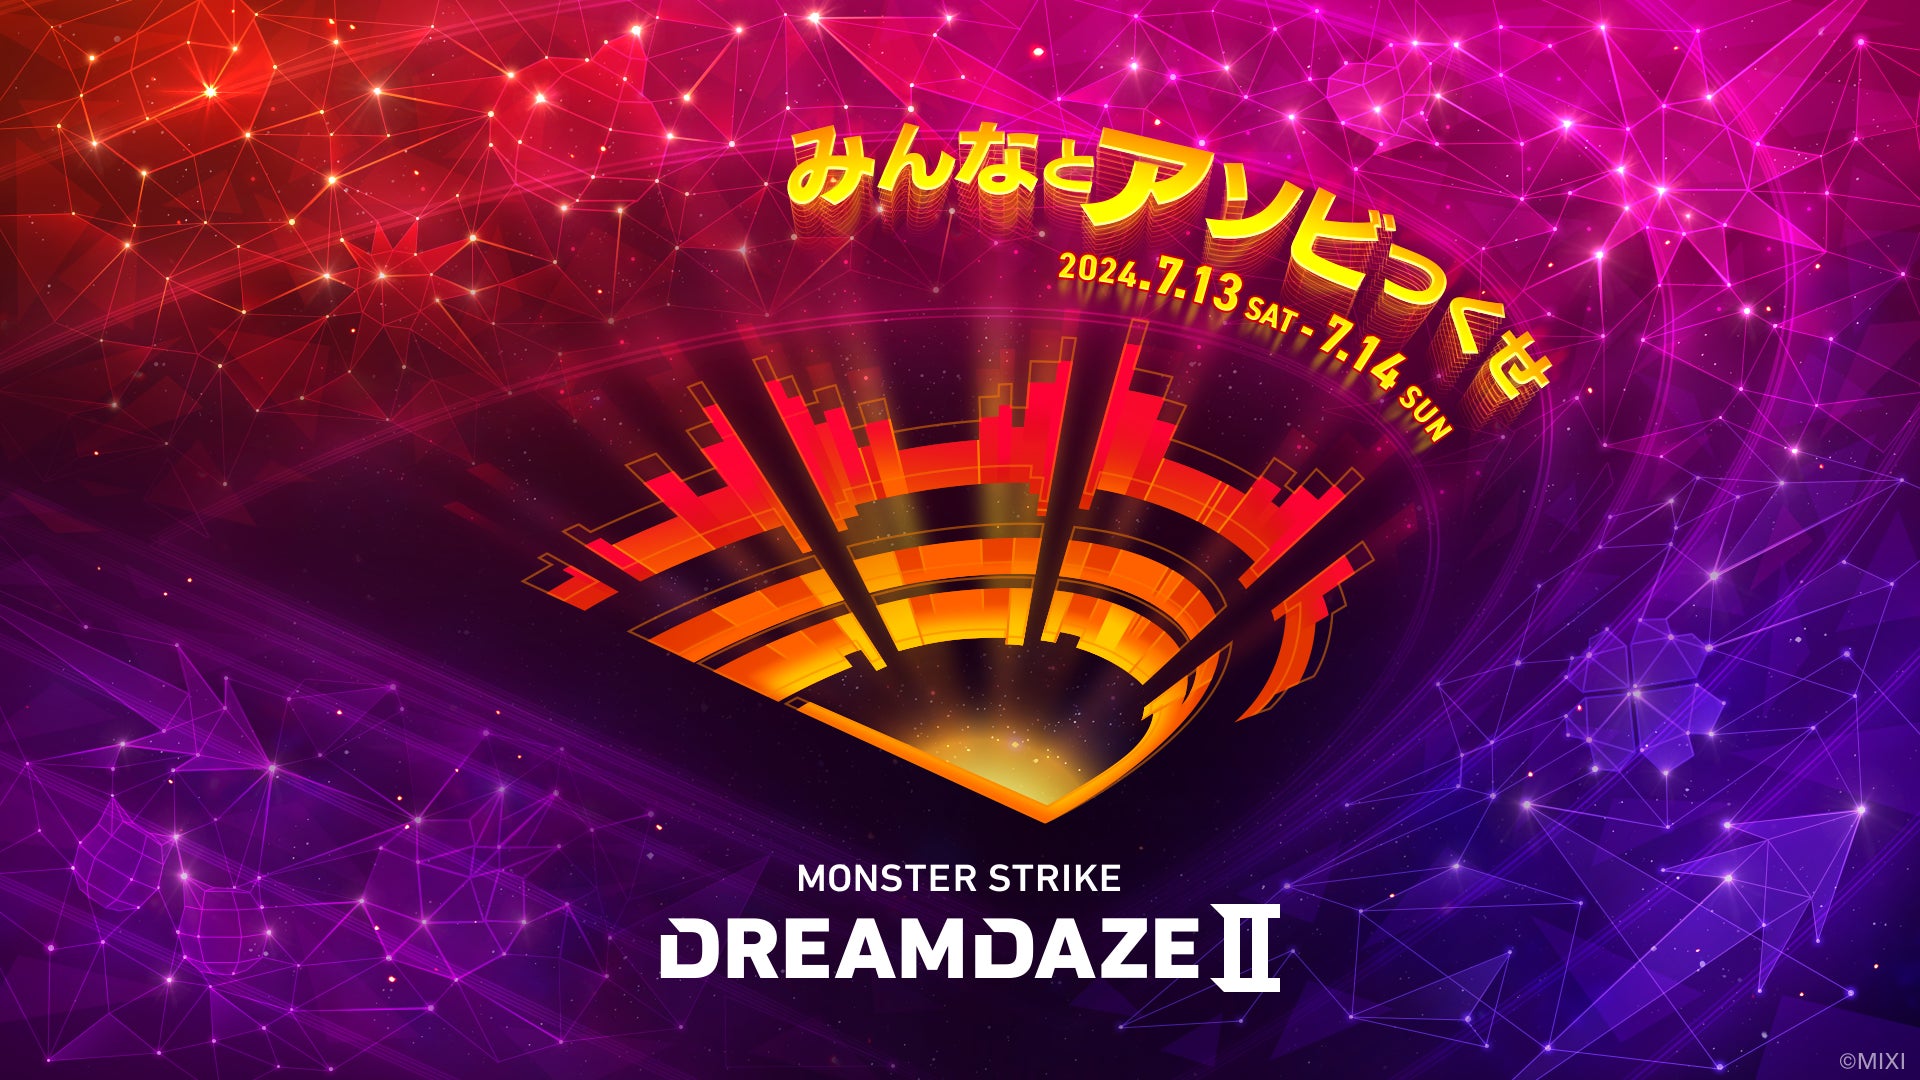 MIXI、夏の恒例イベント「DREAMDAZE Ⅱ」今年は千葉ジェッツのホームアリーナとなる大型多目的アリーナ「LaLa arena TOKYO-BAY」にて開催